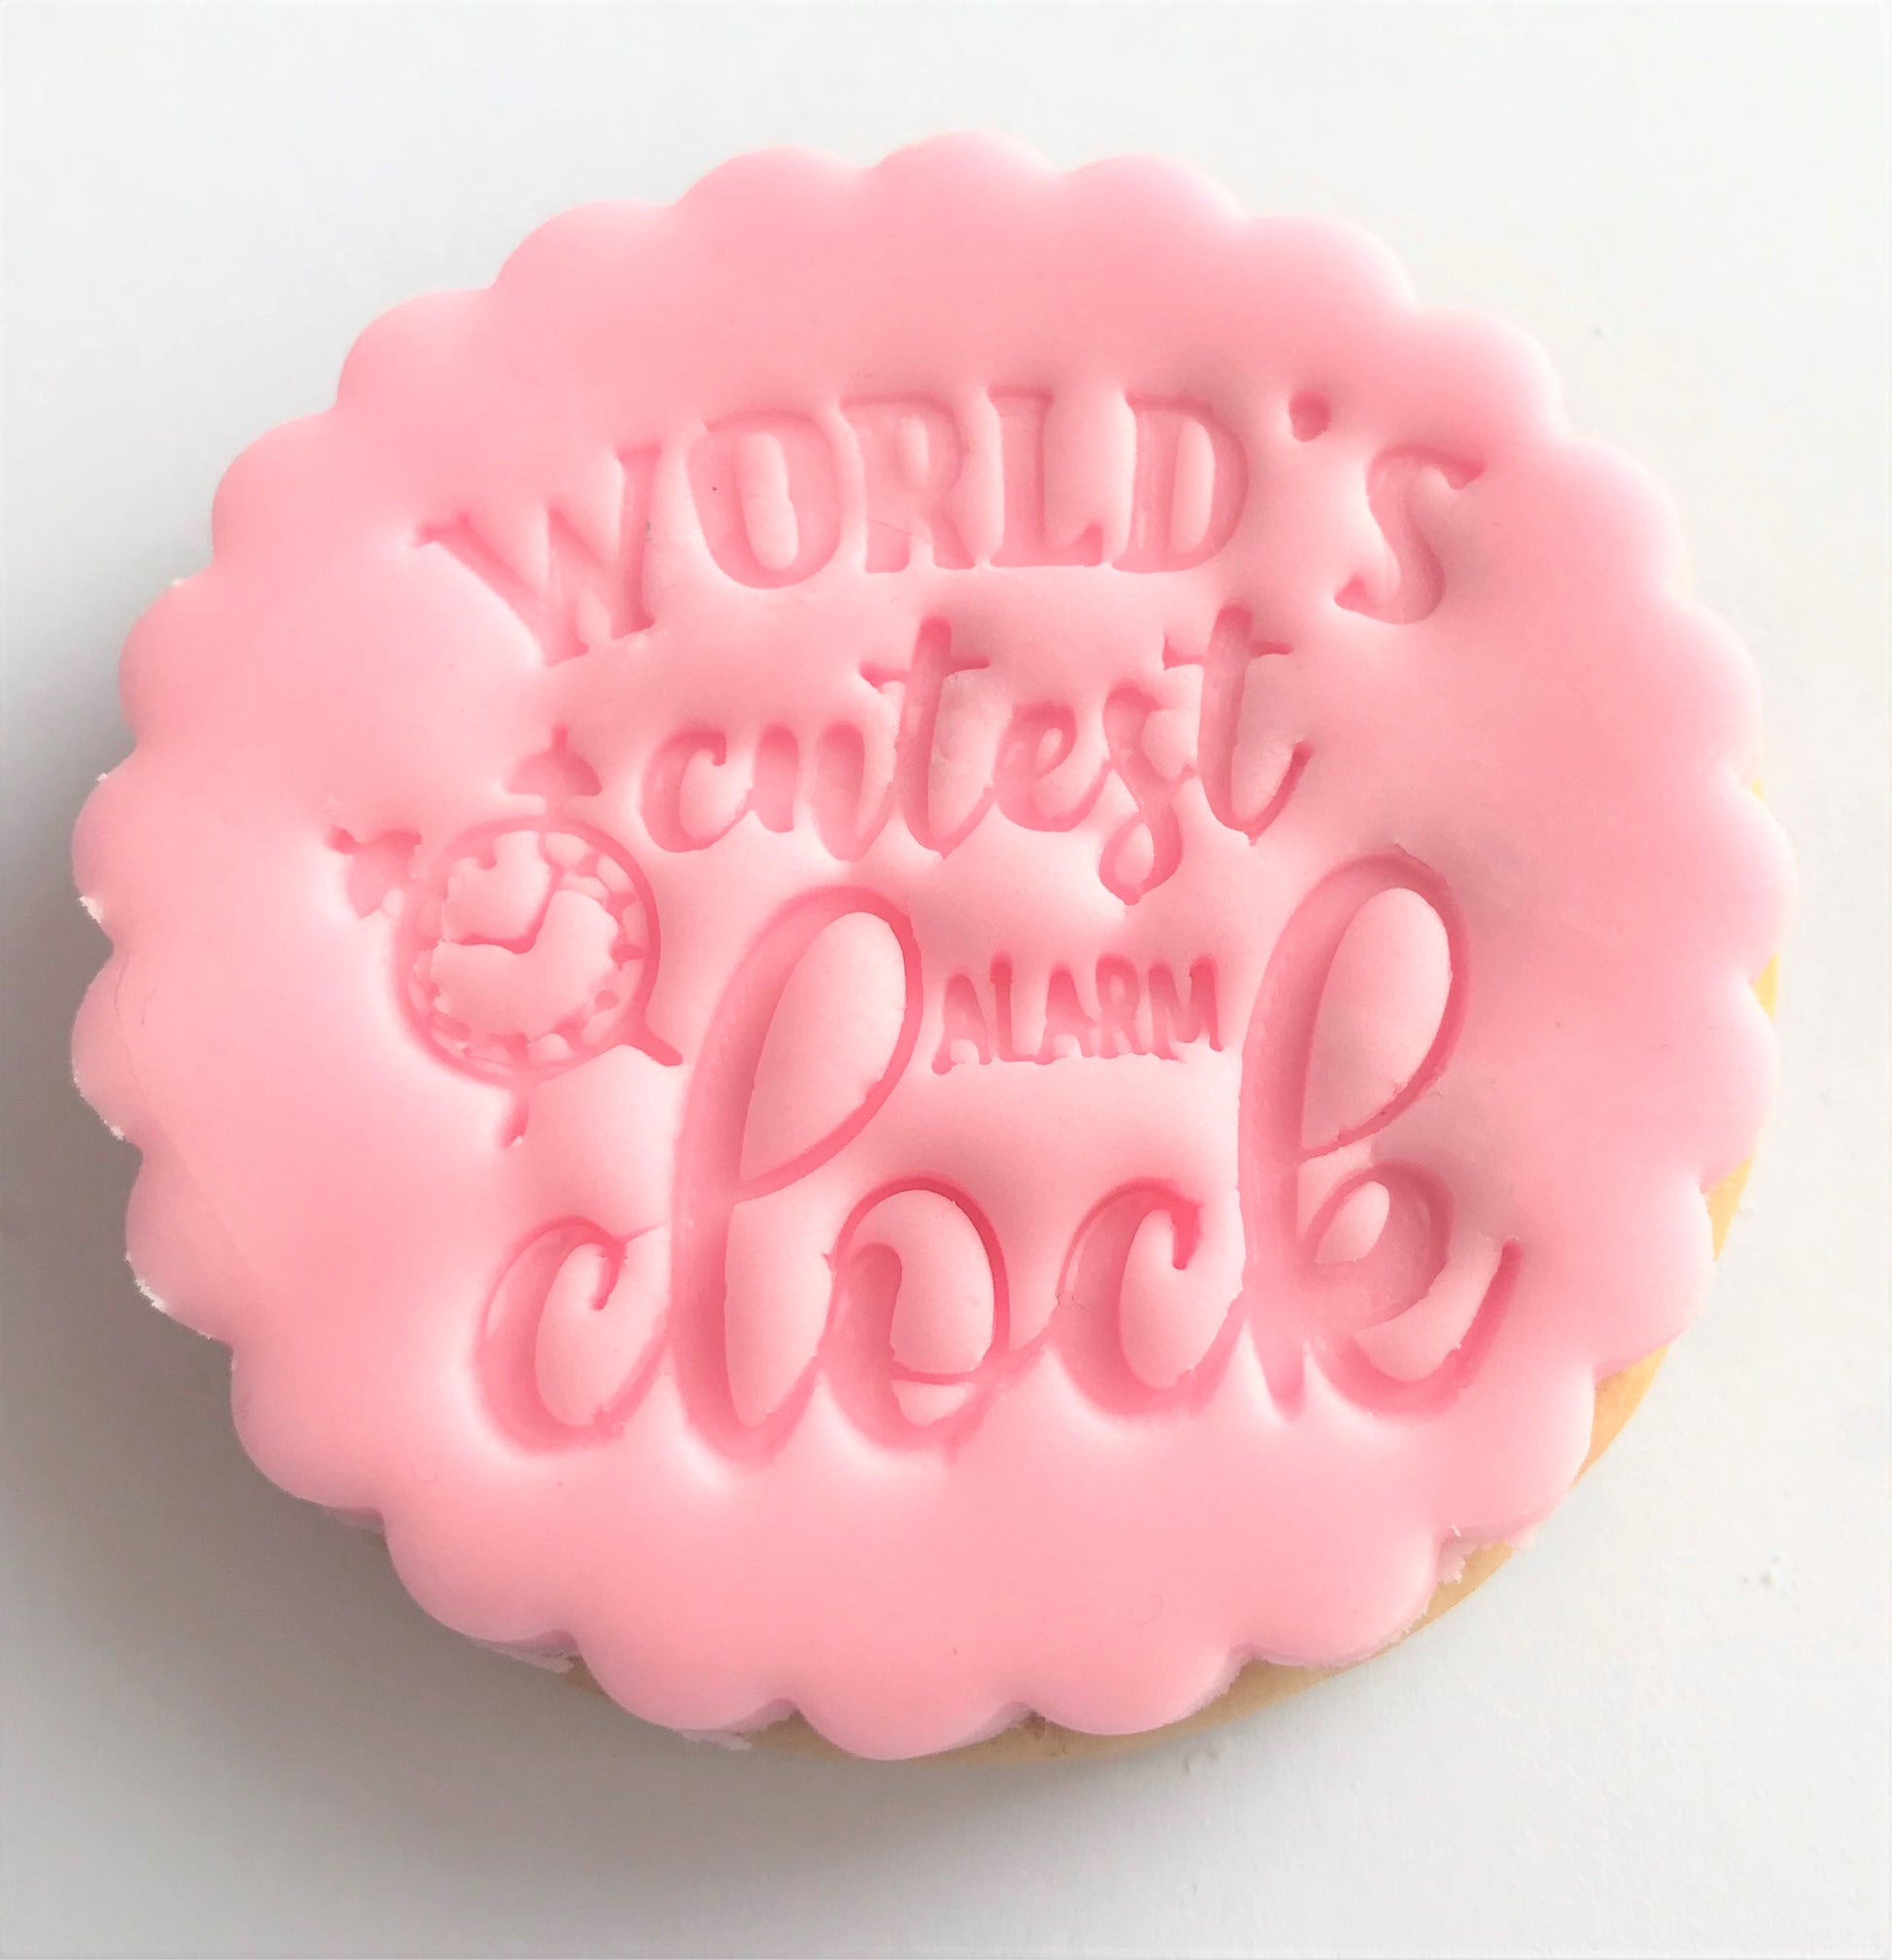 World's Cutest Alarm Clock Cookie Stamp.